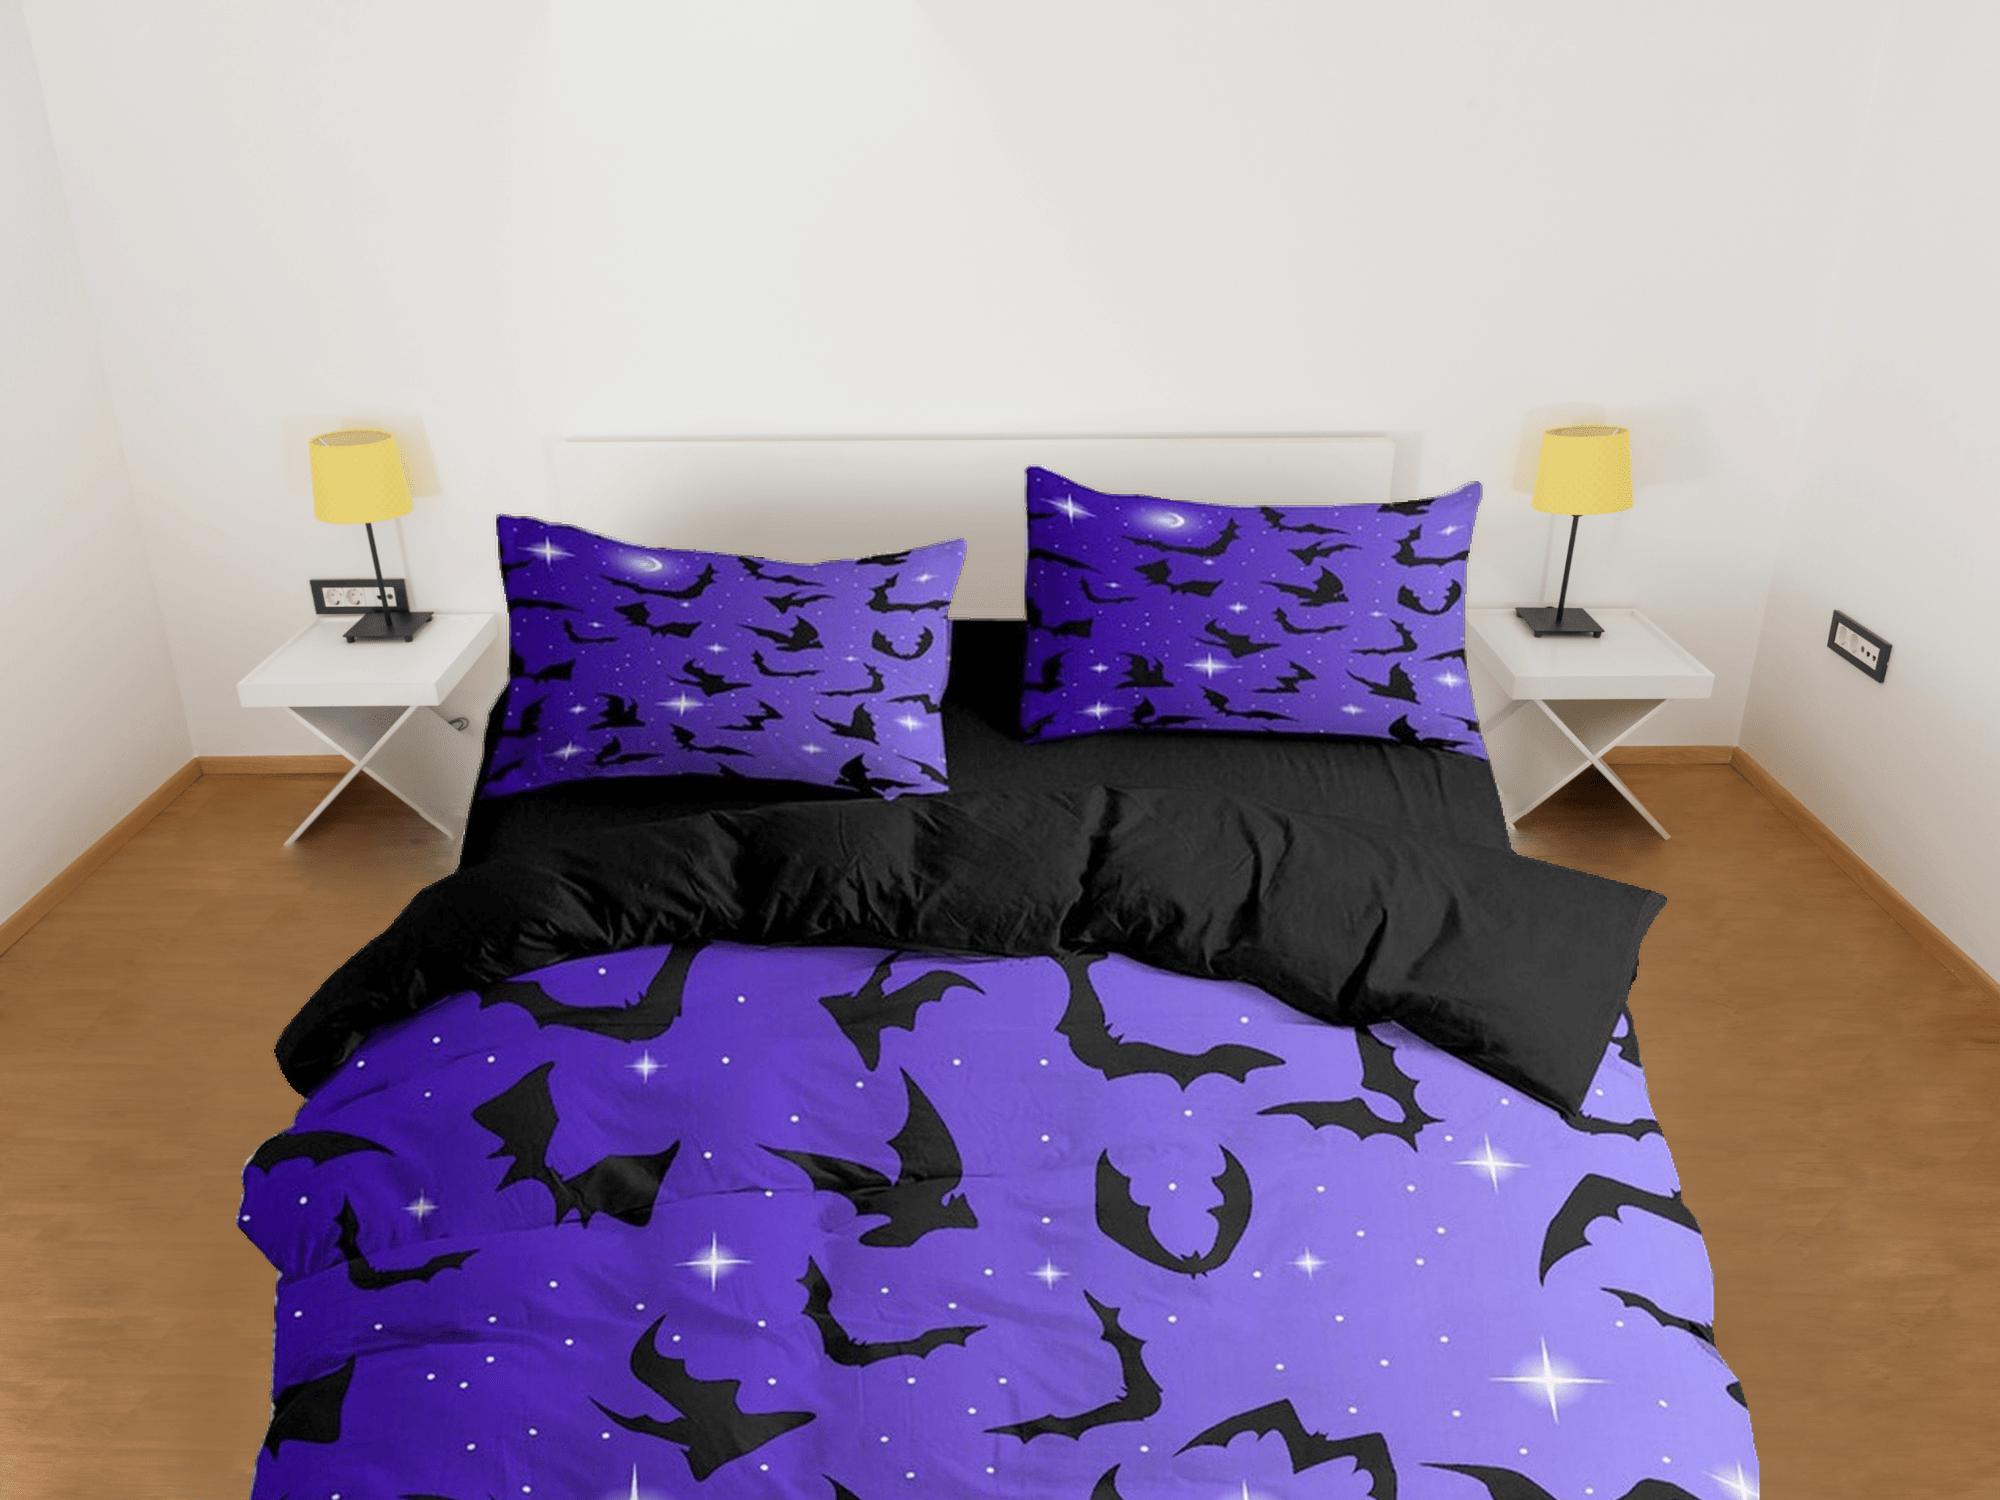 daintyduvet Sparkly bats halloween full size bedding & pillowcase, veri peri purple duvet cover set dorm bedding nursery toddler bedding, halloween gift